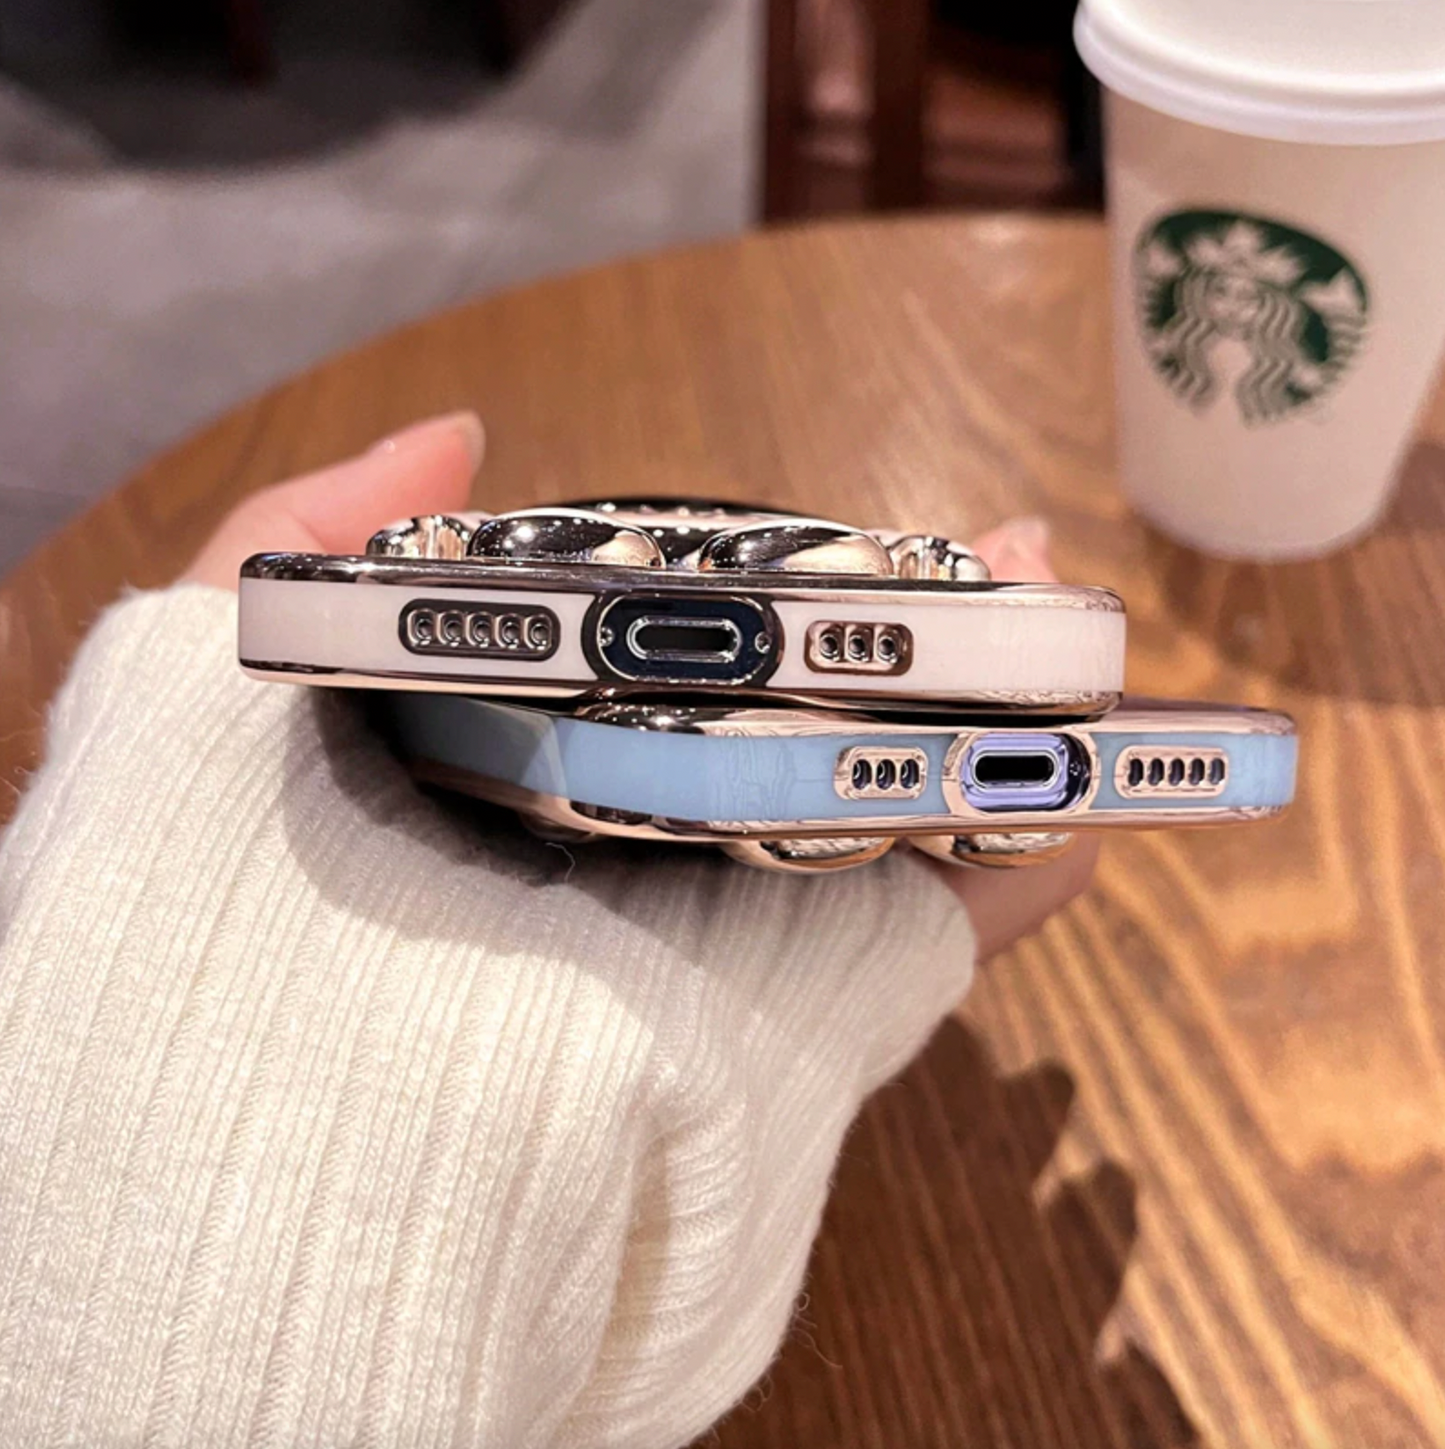 iPhone 12 Series Luxurious Astronaut Bracket Case